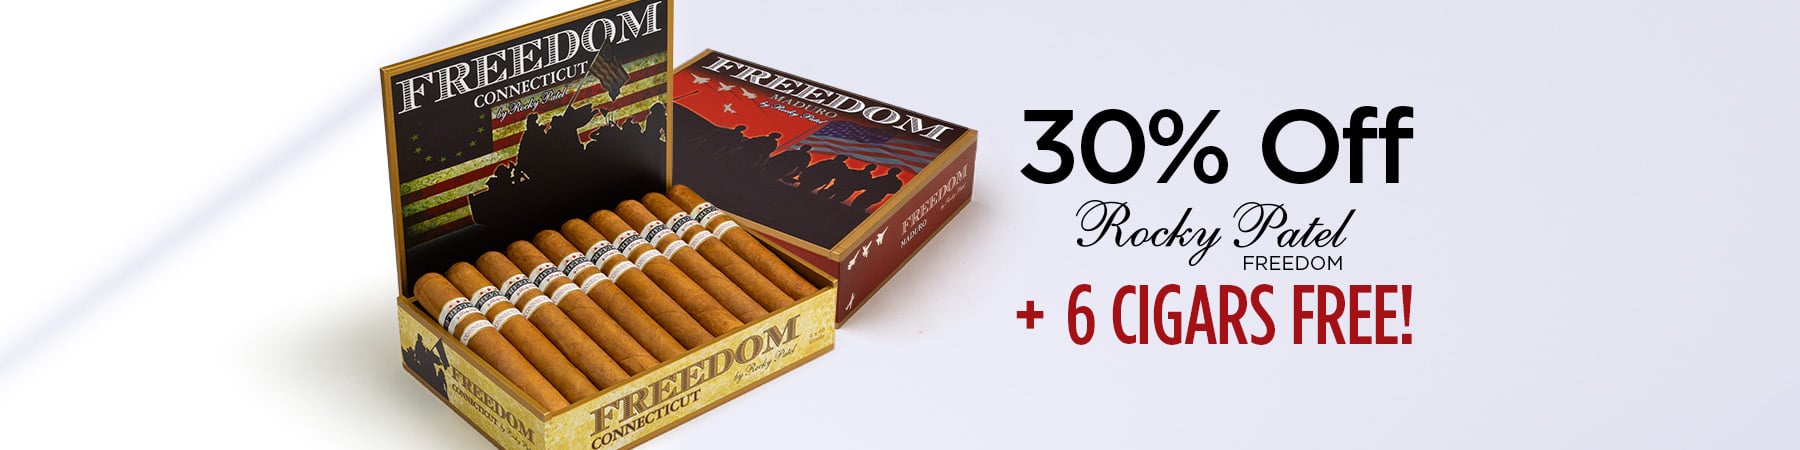 30% Off Rocky Patel Freedom					
+ 6 Cigars Free!